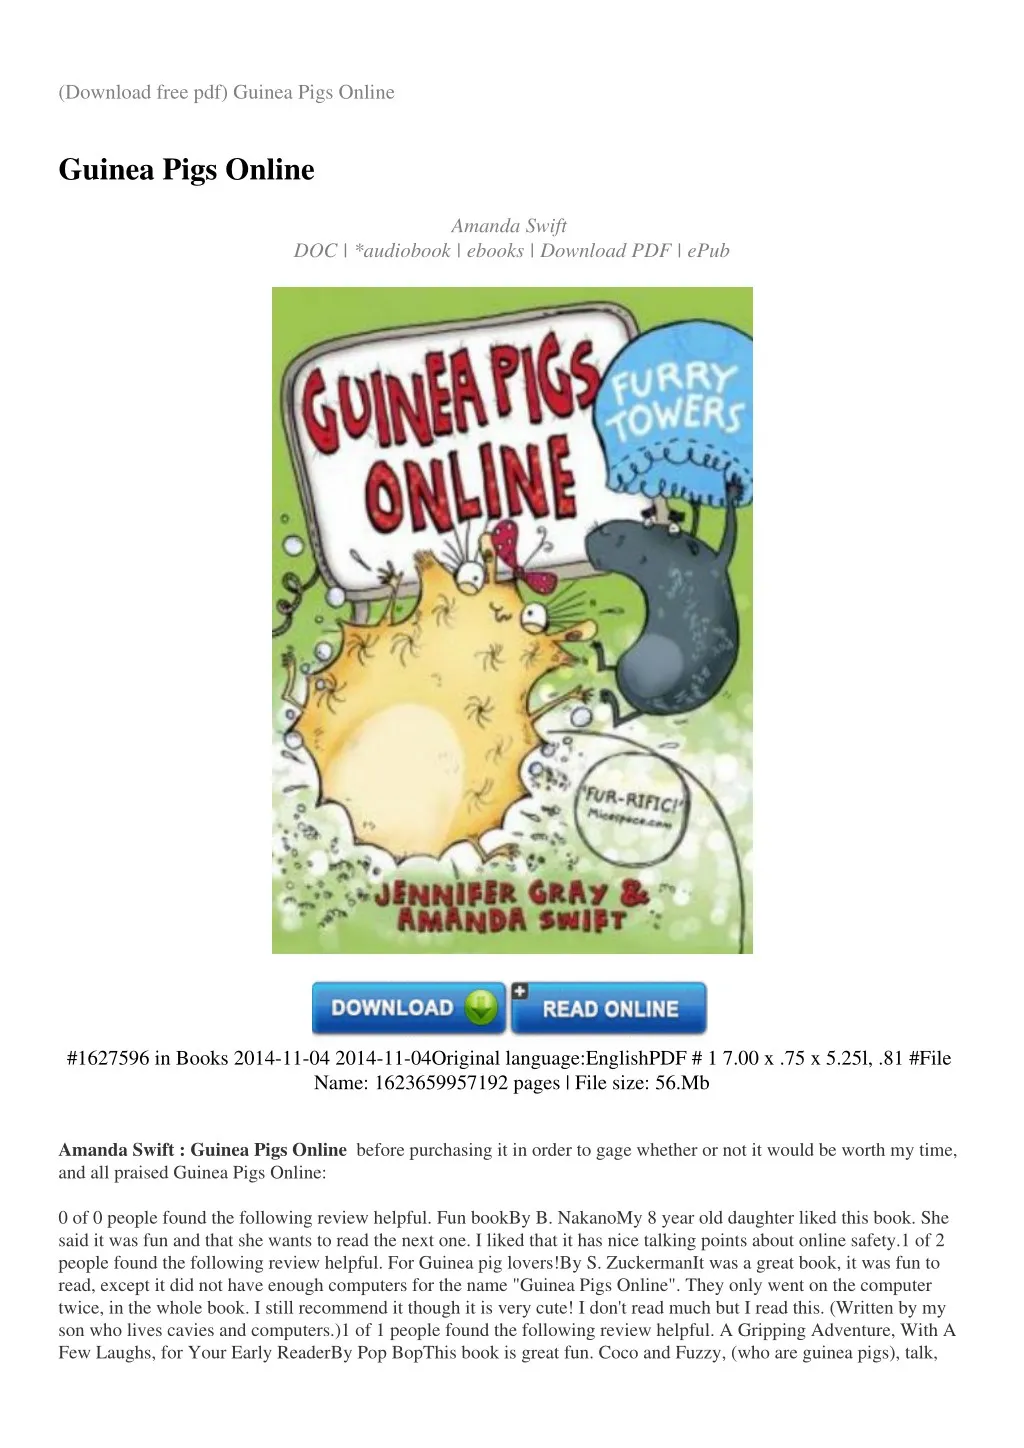 download free pdf guinea pigs online